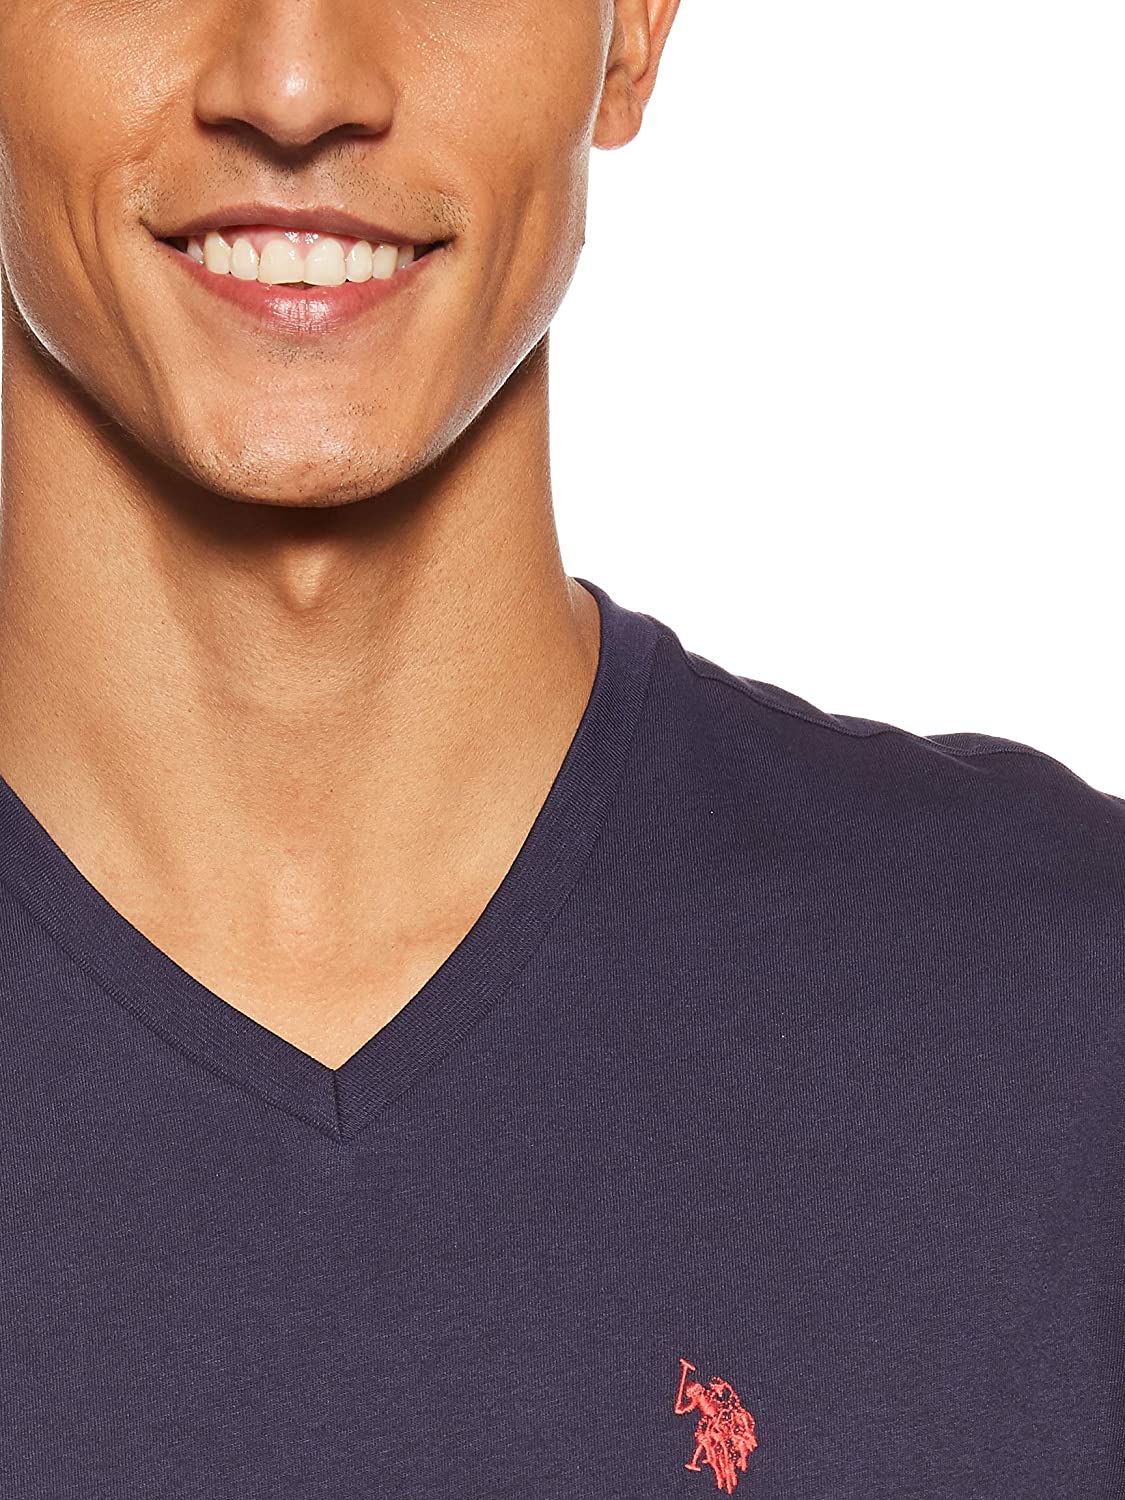 U.S. Polo Assn. Men's V-Neck T-Shirt - image 4 of 5